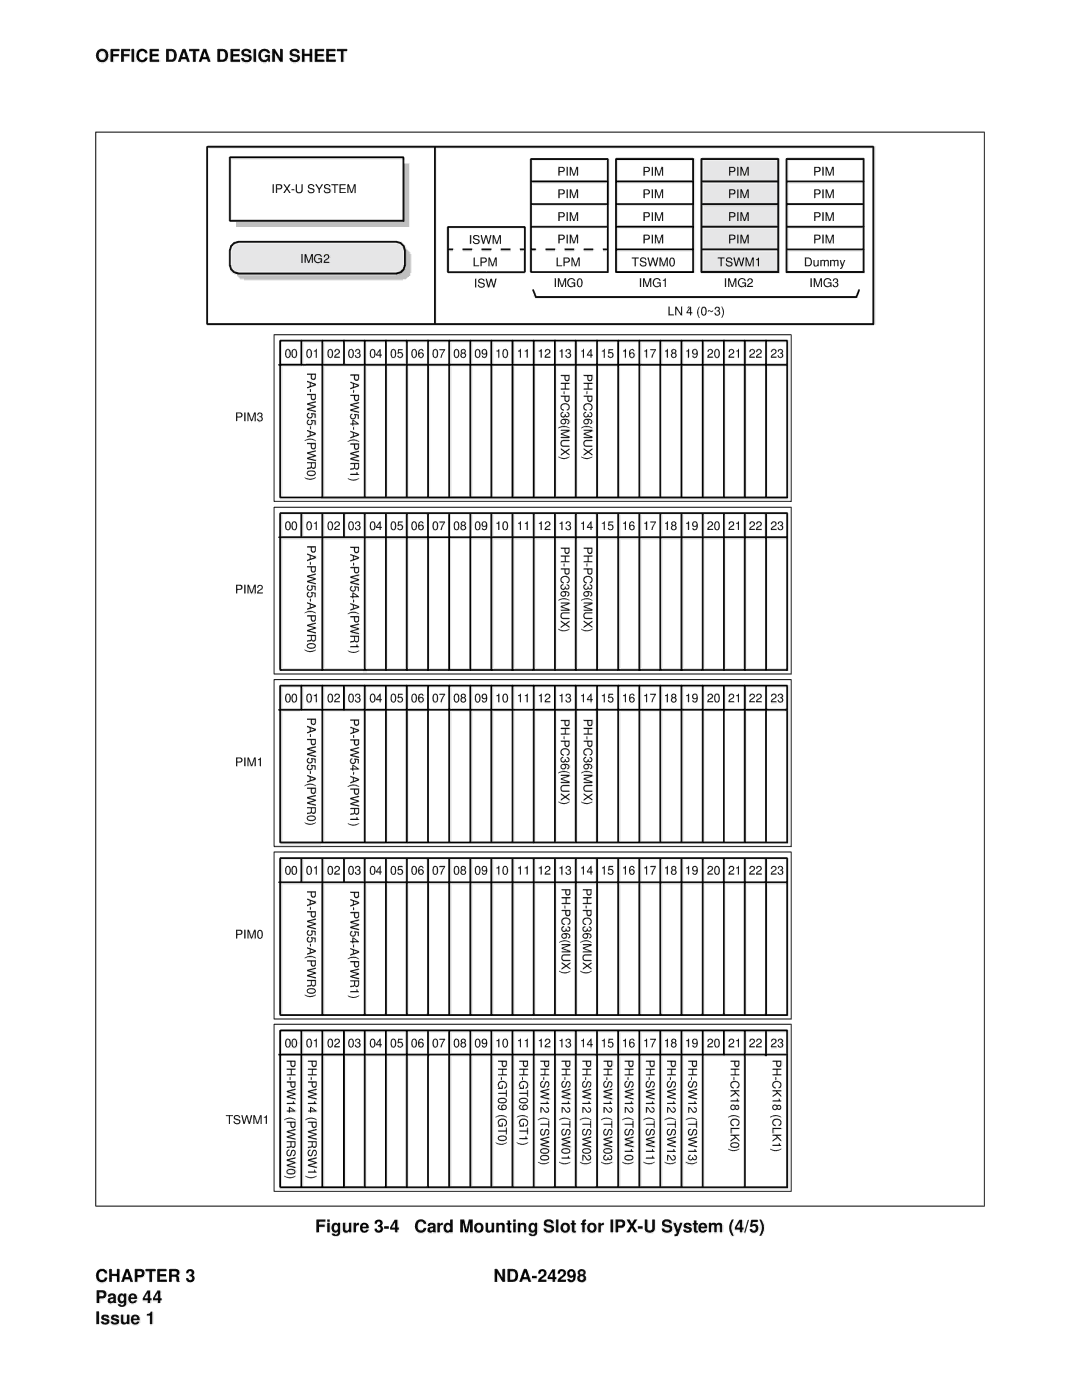 NEC NDA-24298 manual Card Mounting Slot for IPX-U System 4/5 